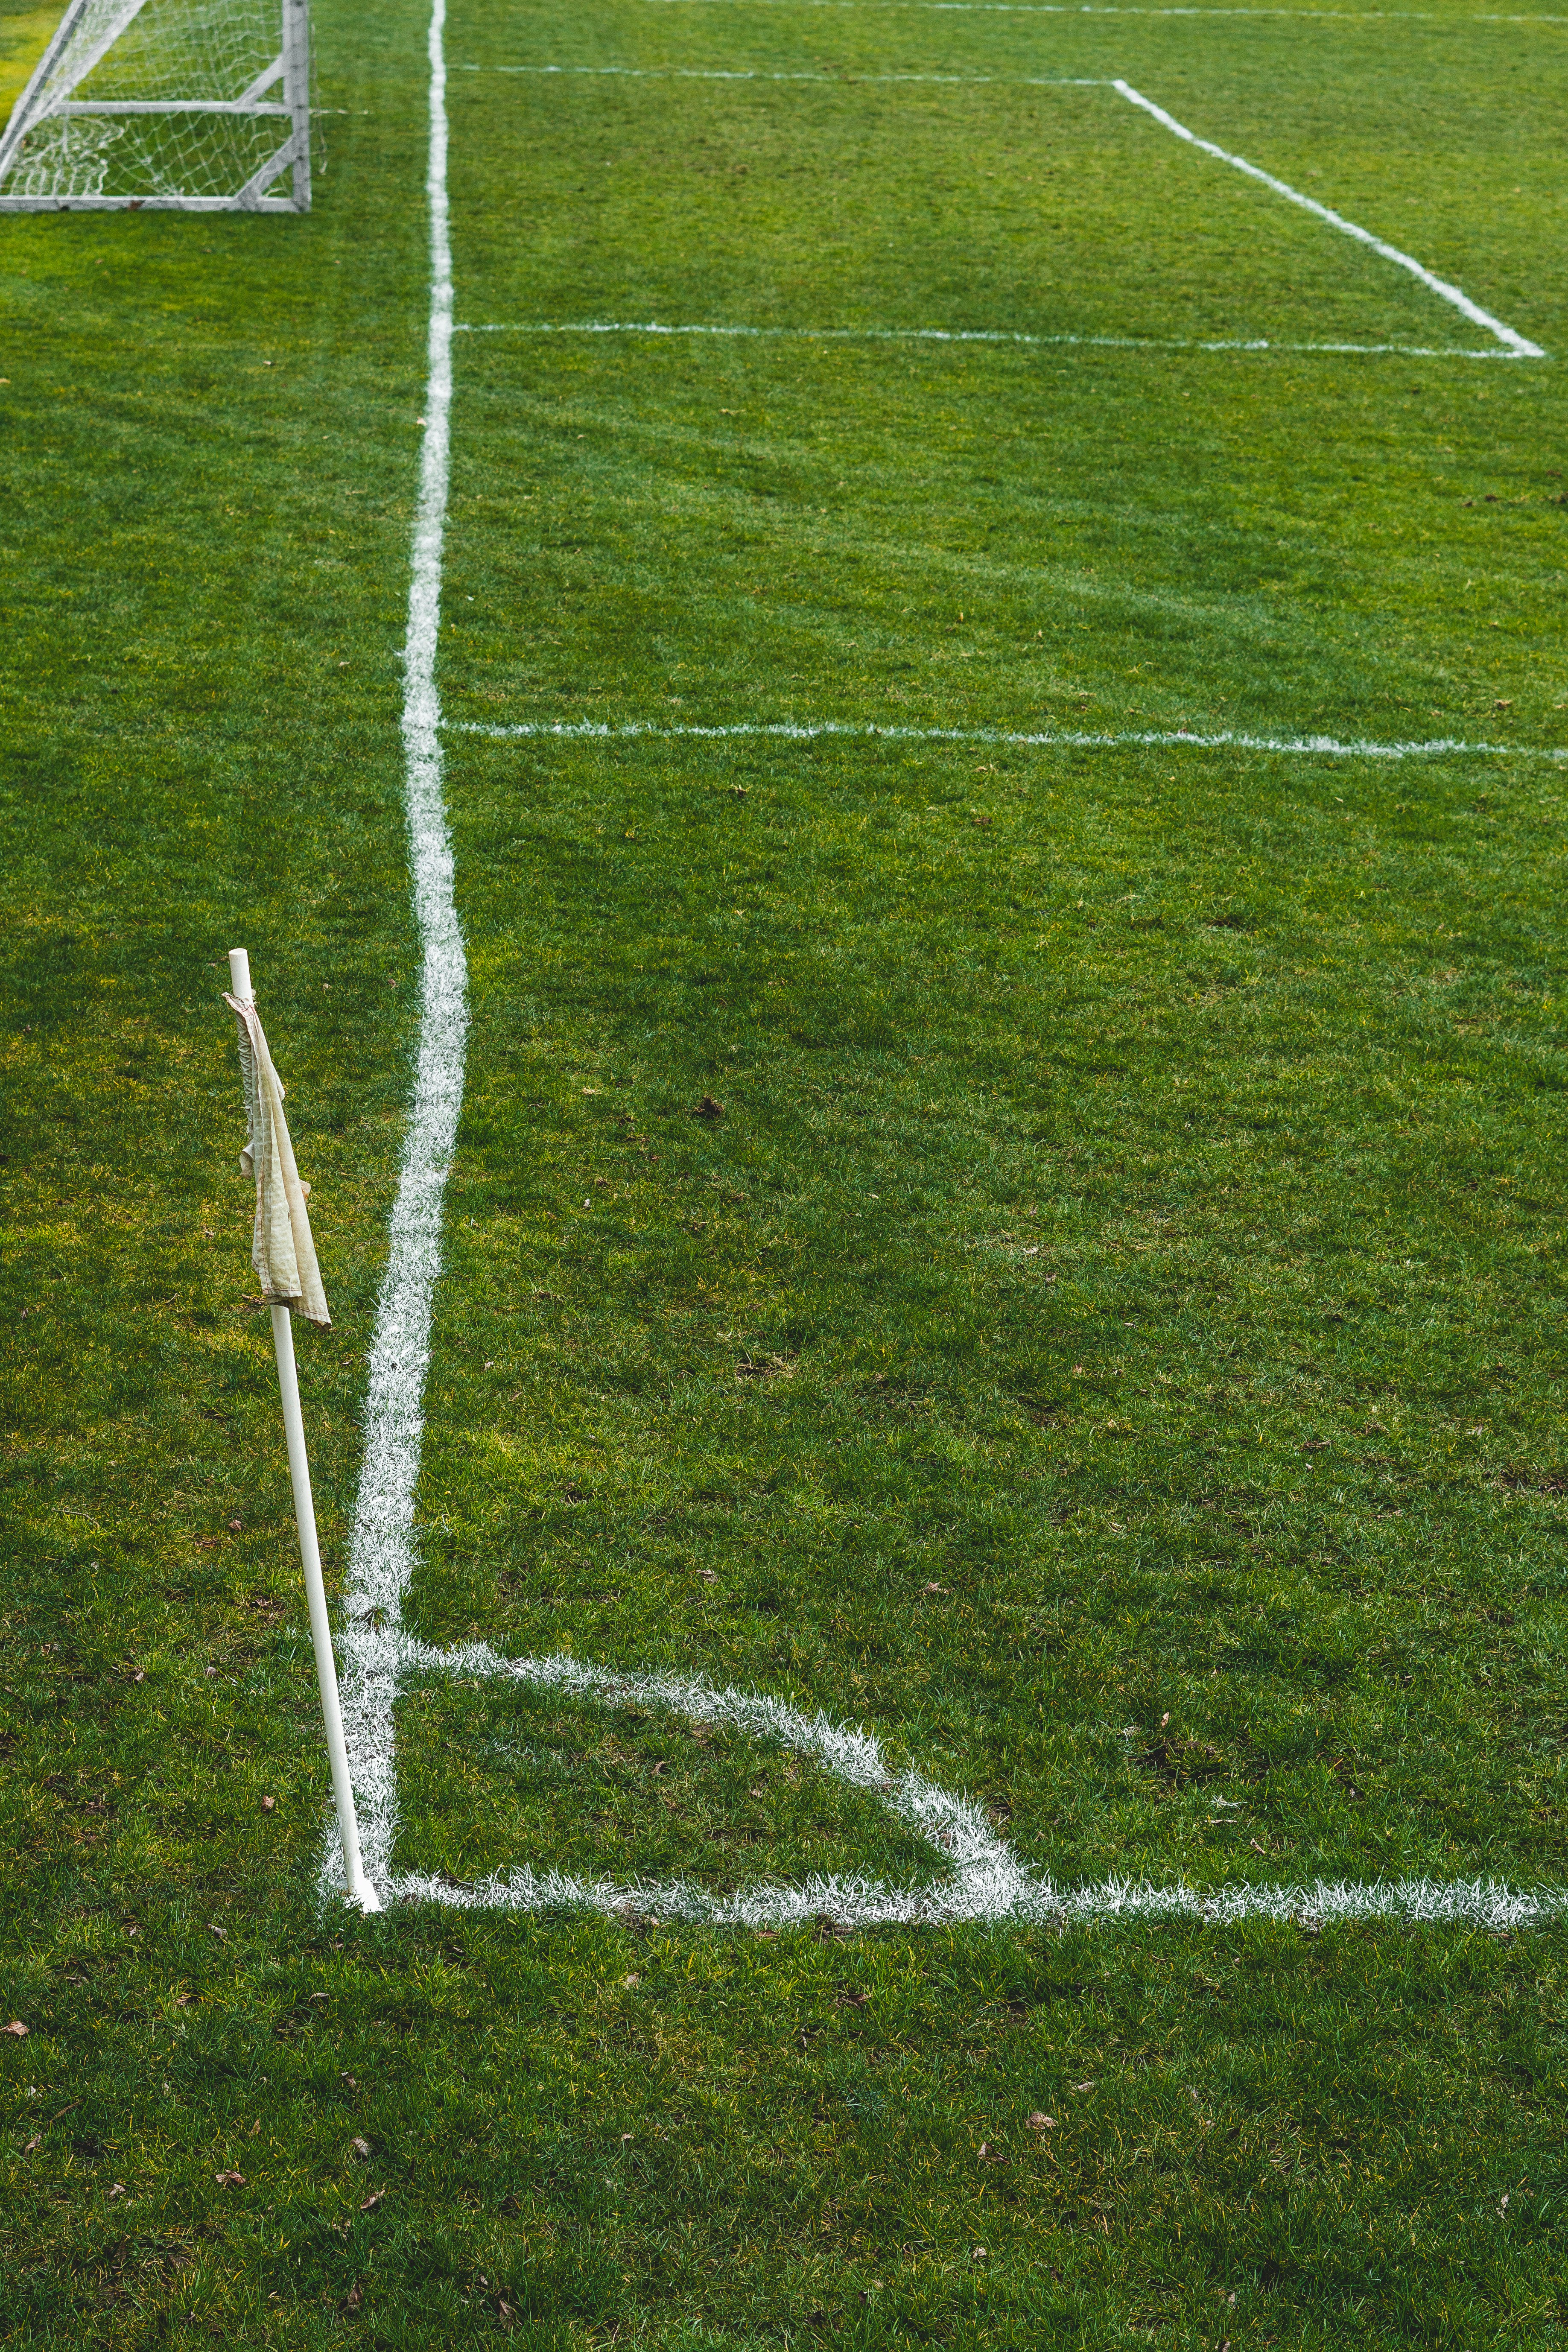 white and black soccer goal on green grass field